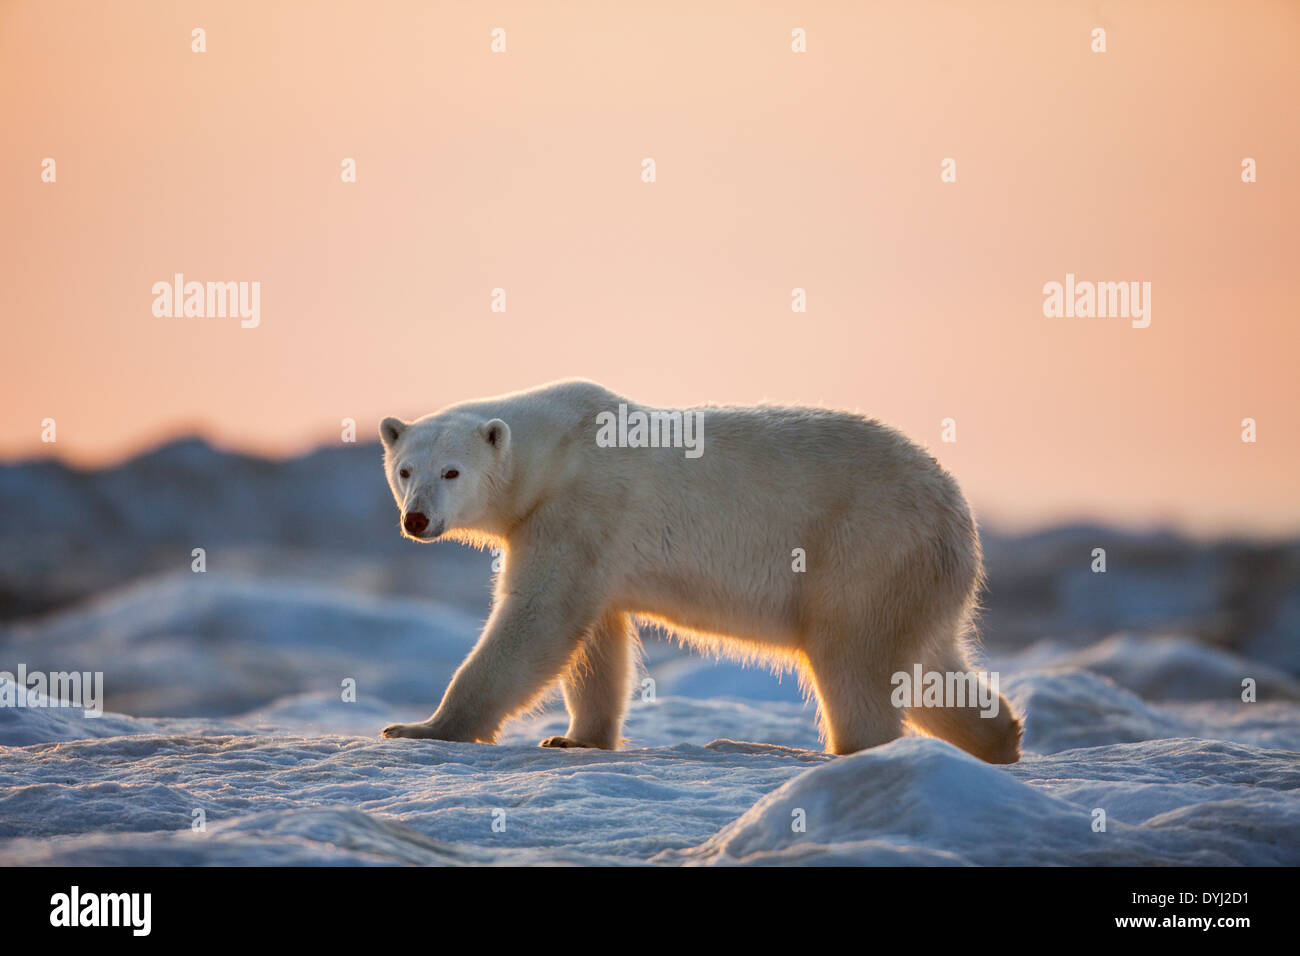 Canada, Nunavut Territory, White Island, Setting midnight sun lights Polar Bear (Ursus maritimus) walking on pack ice Stock Photo